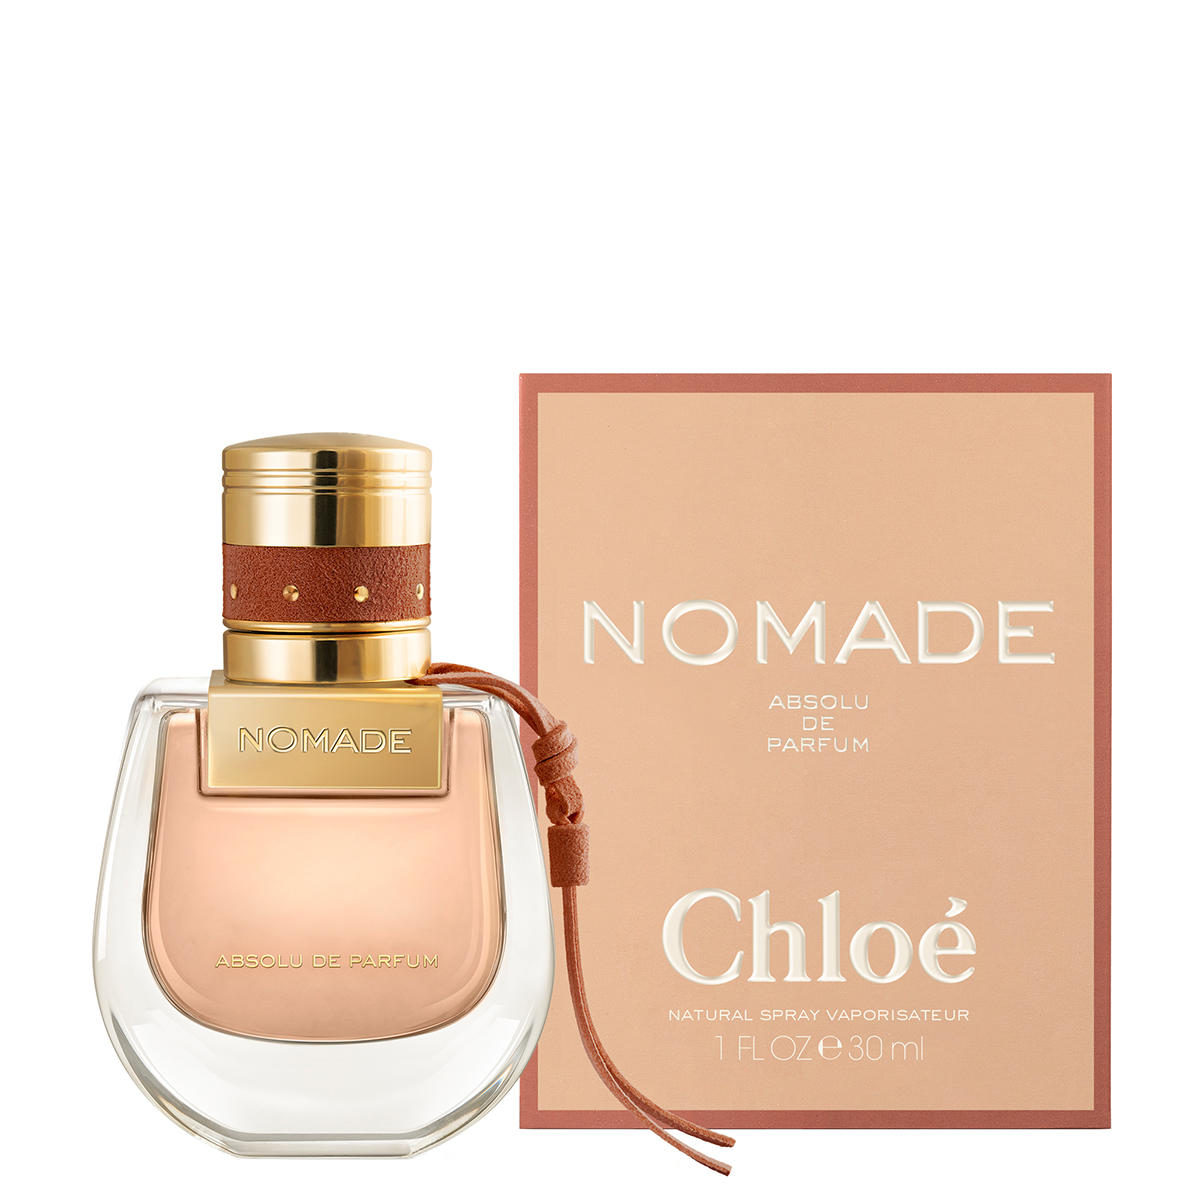 Chloé Nomade Absolu de Parfum Eau de Parfum 30 ml - 2